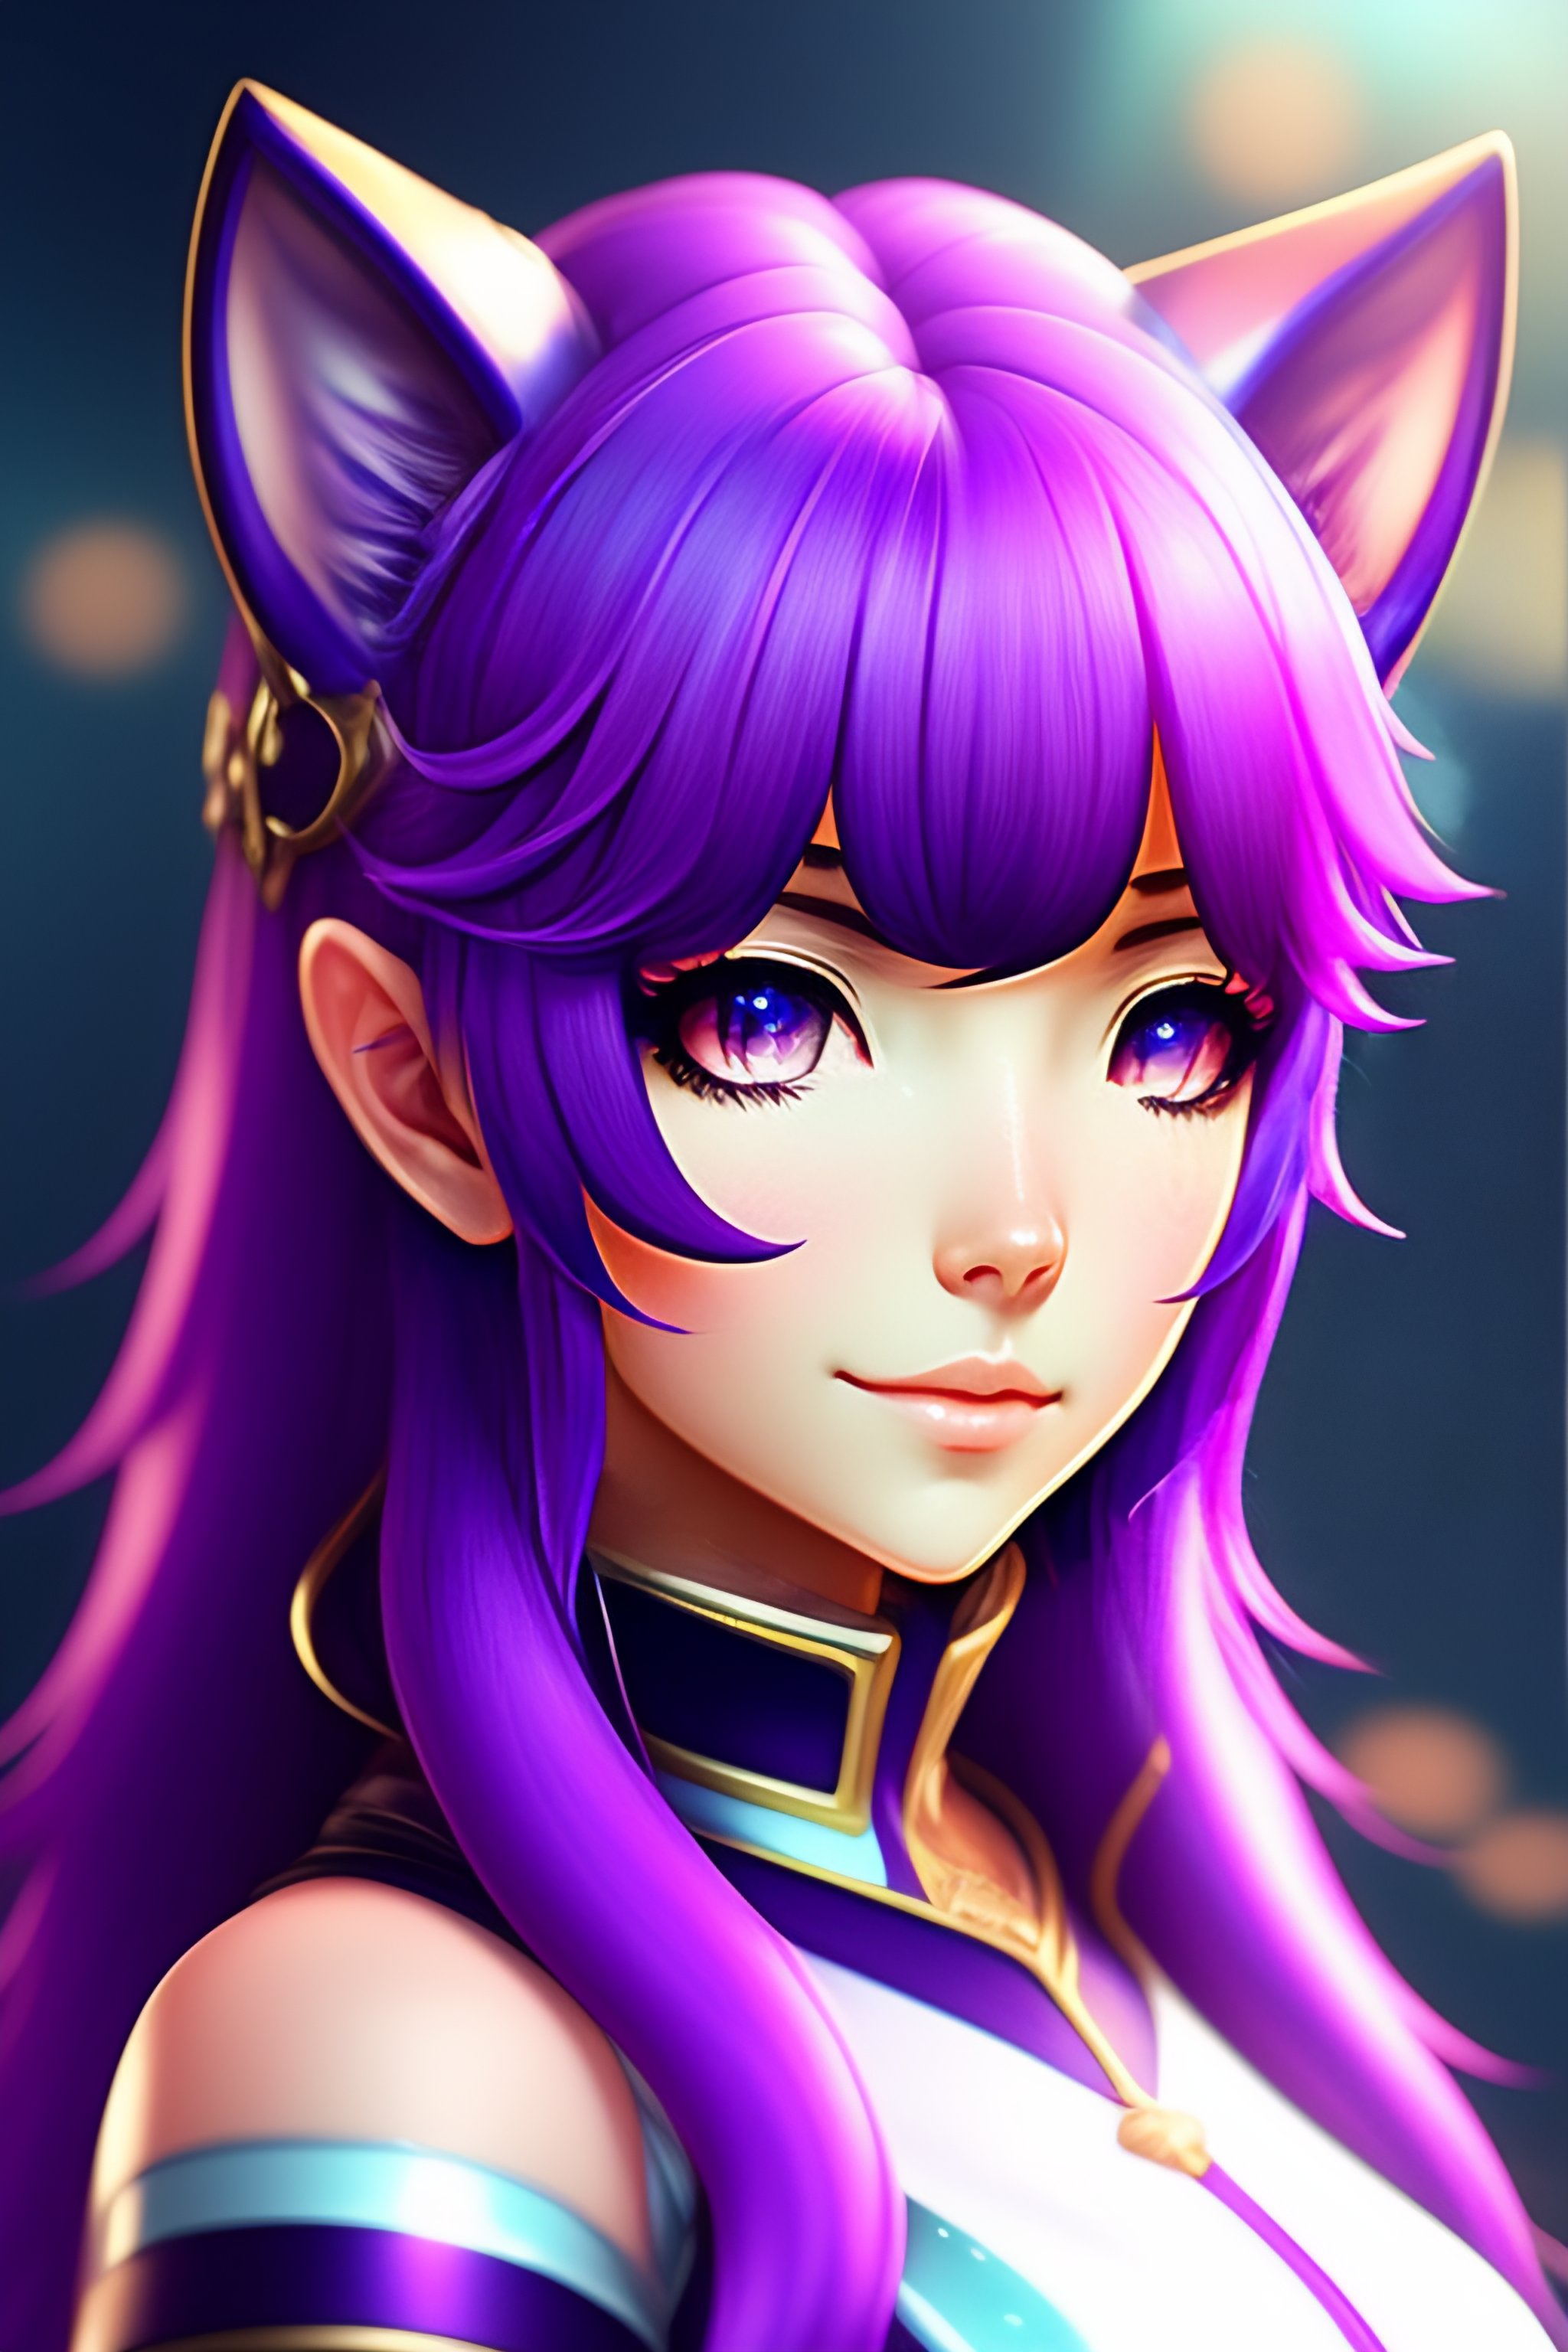 Lexica - Purple cat girl profile picture, anime style